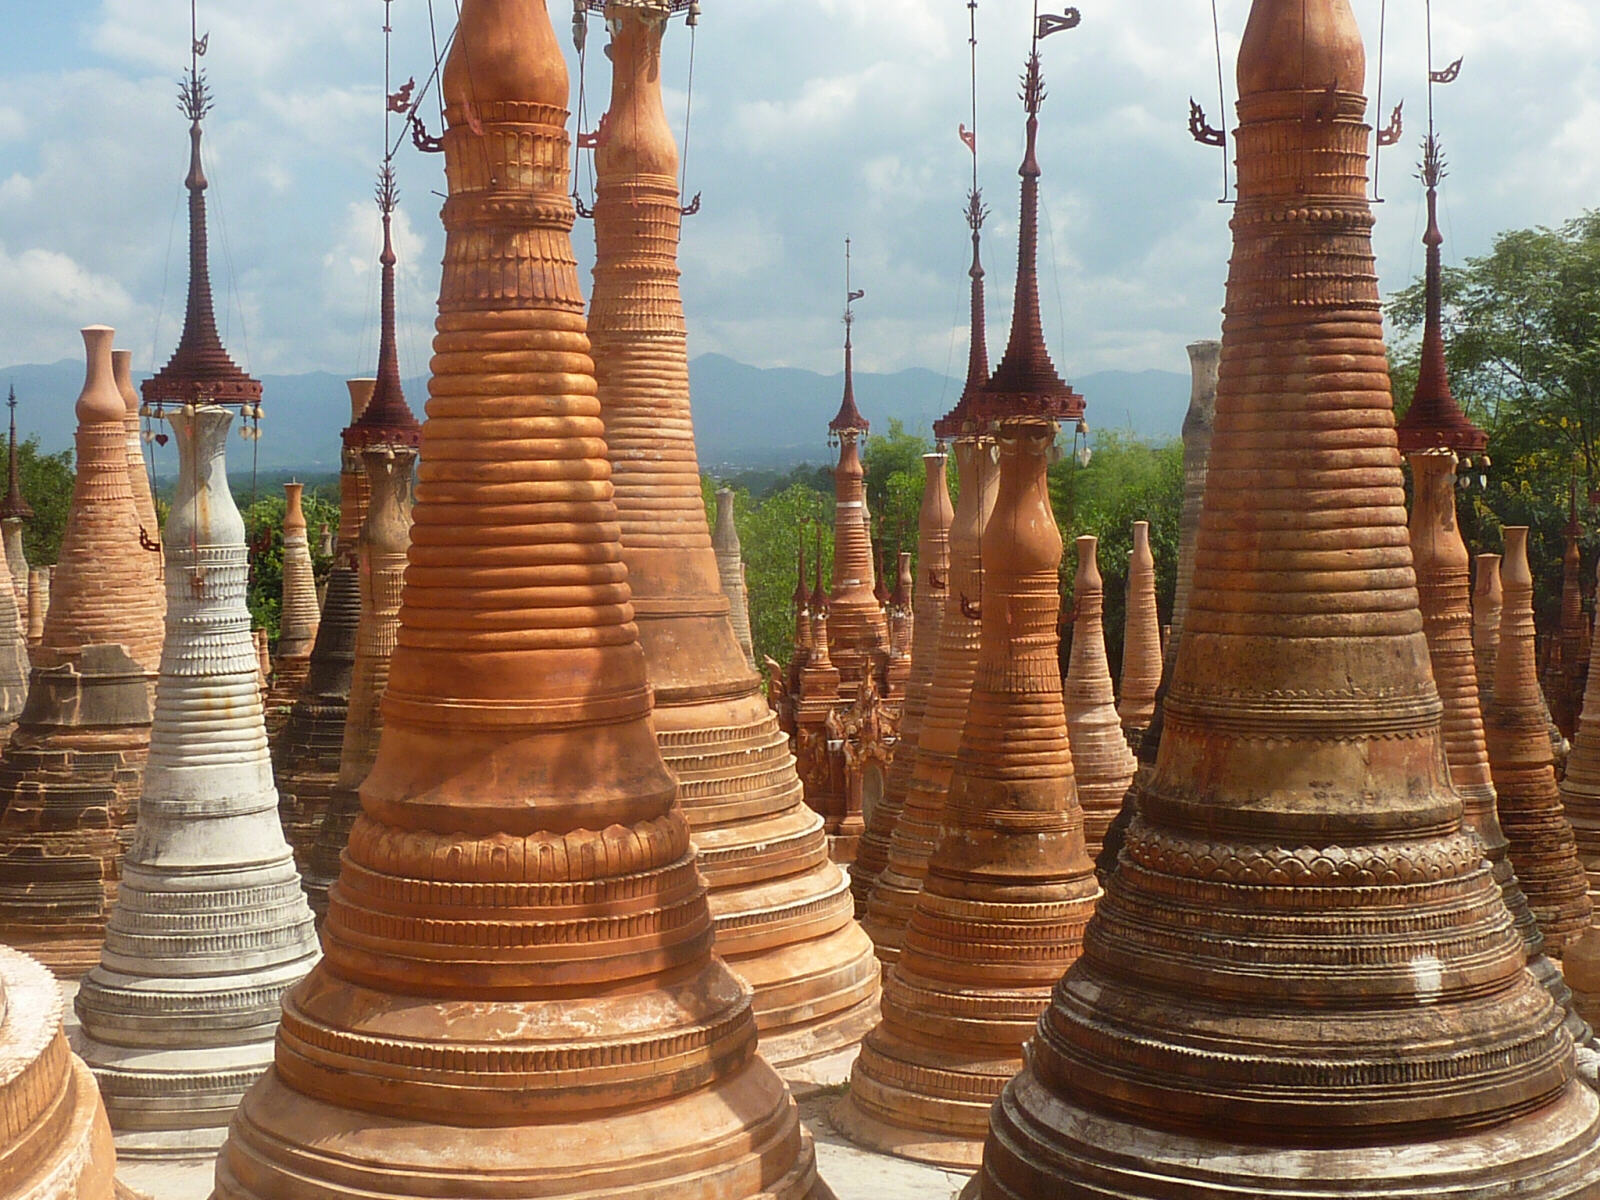 Some of the 1054 pagodas at Inn Tein monastery, Inle lake, Burma